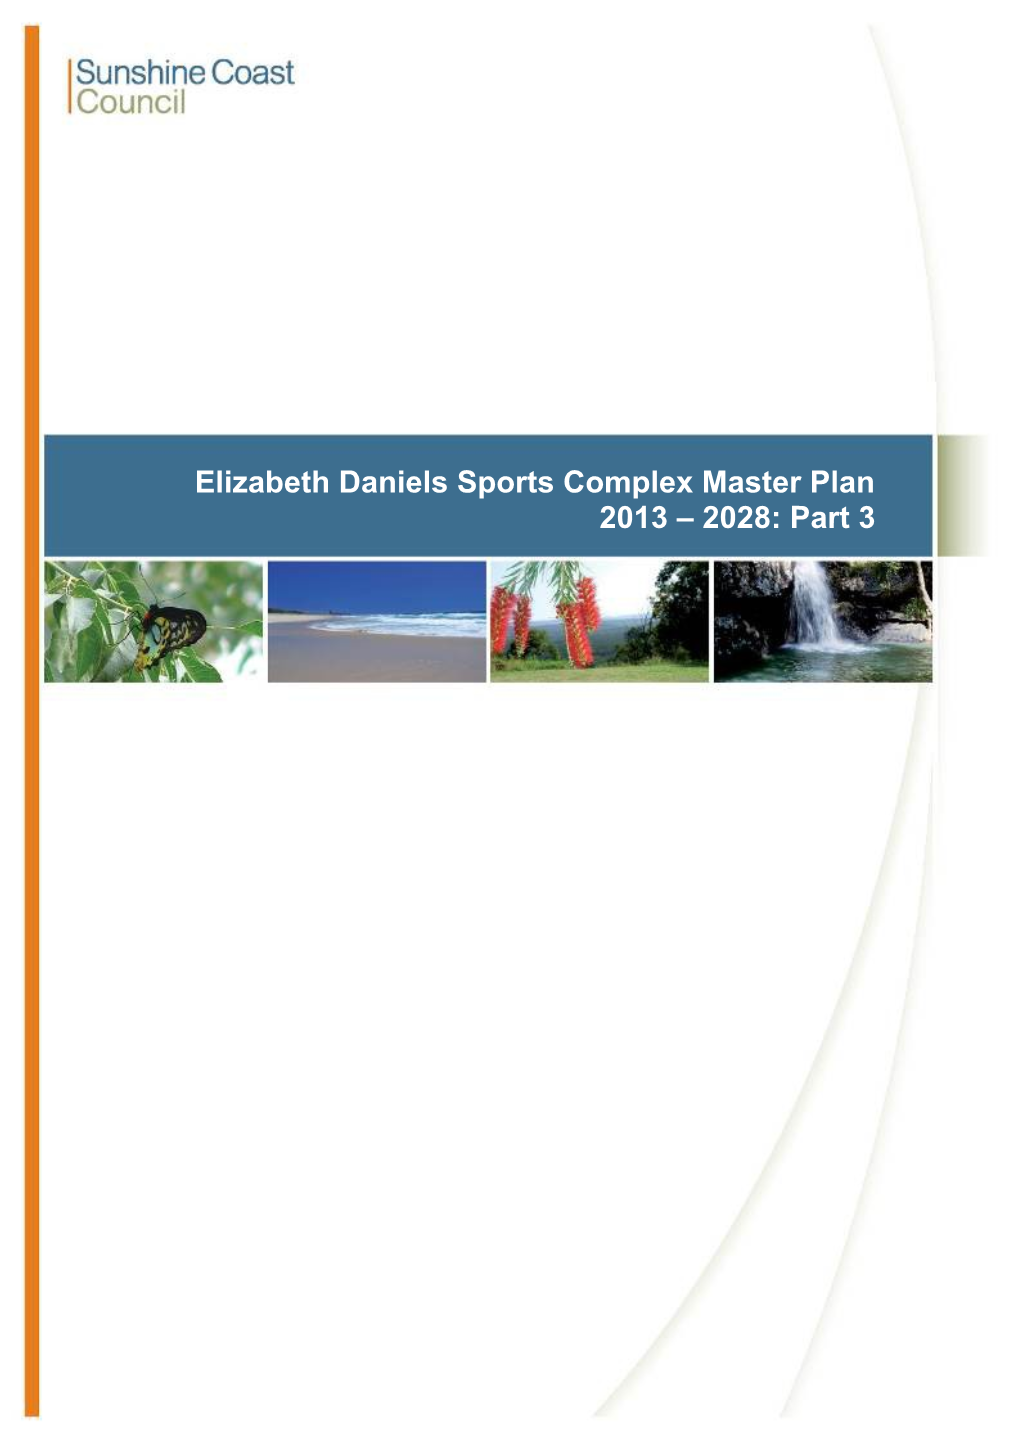 Elizabeth Daniels Sports Complex Master Plan (2013 2028) Draft Report